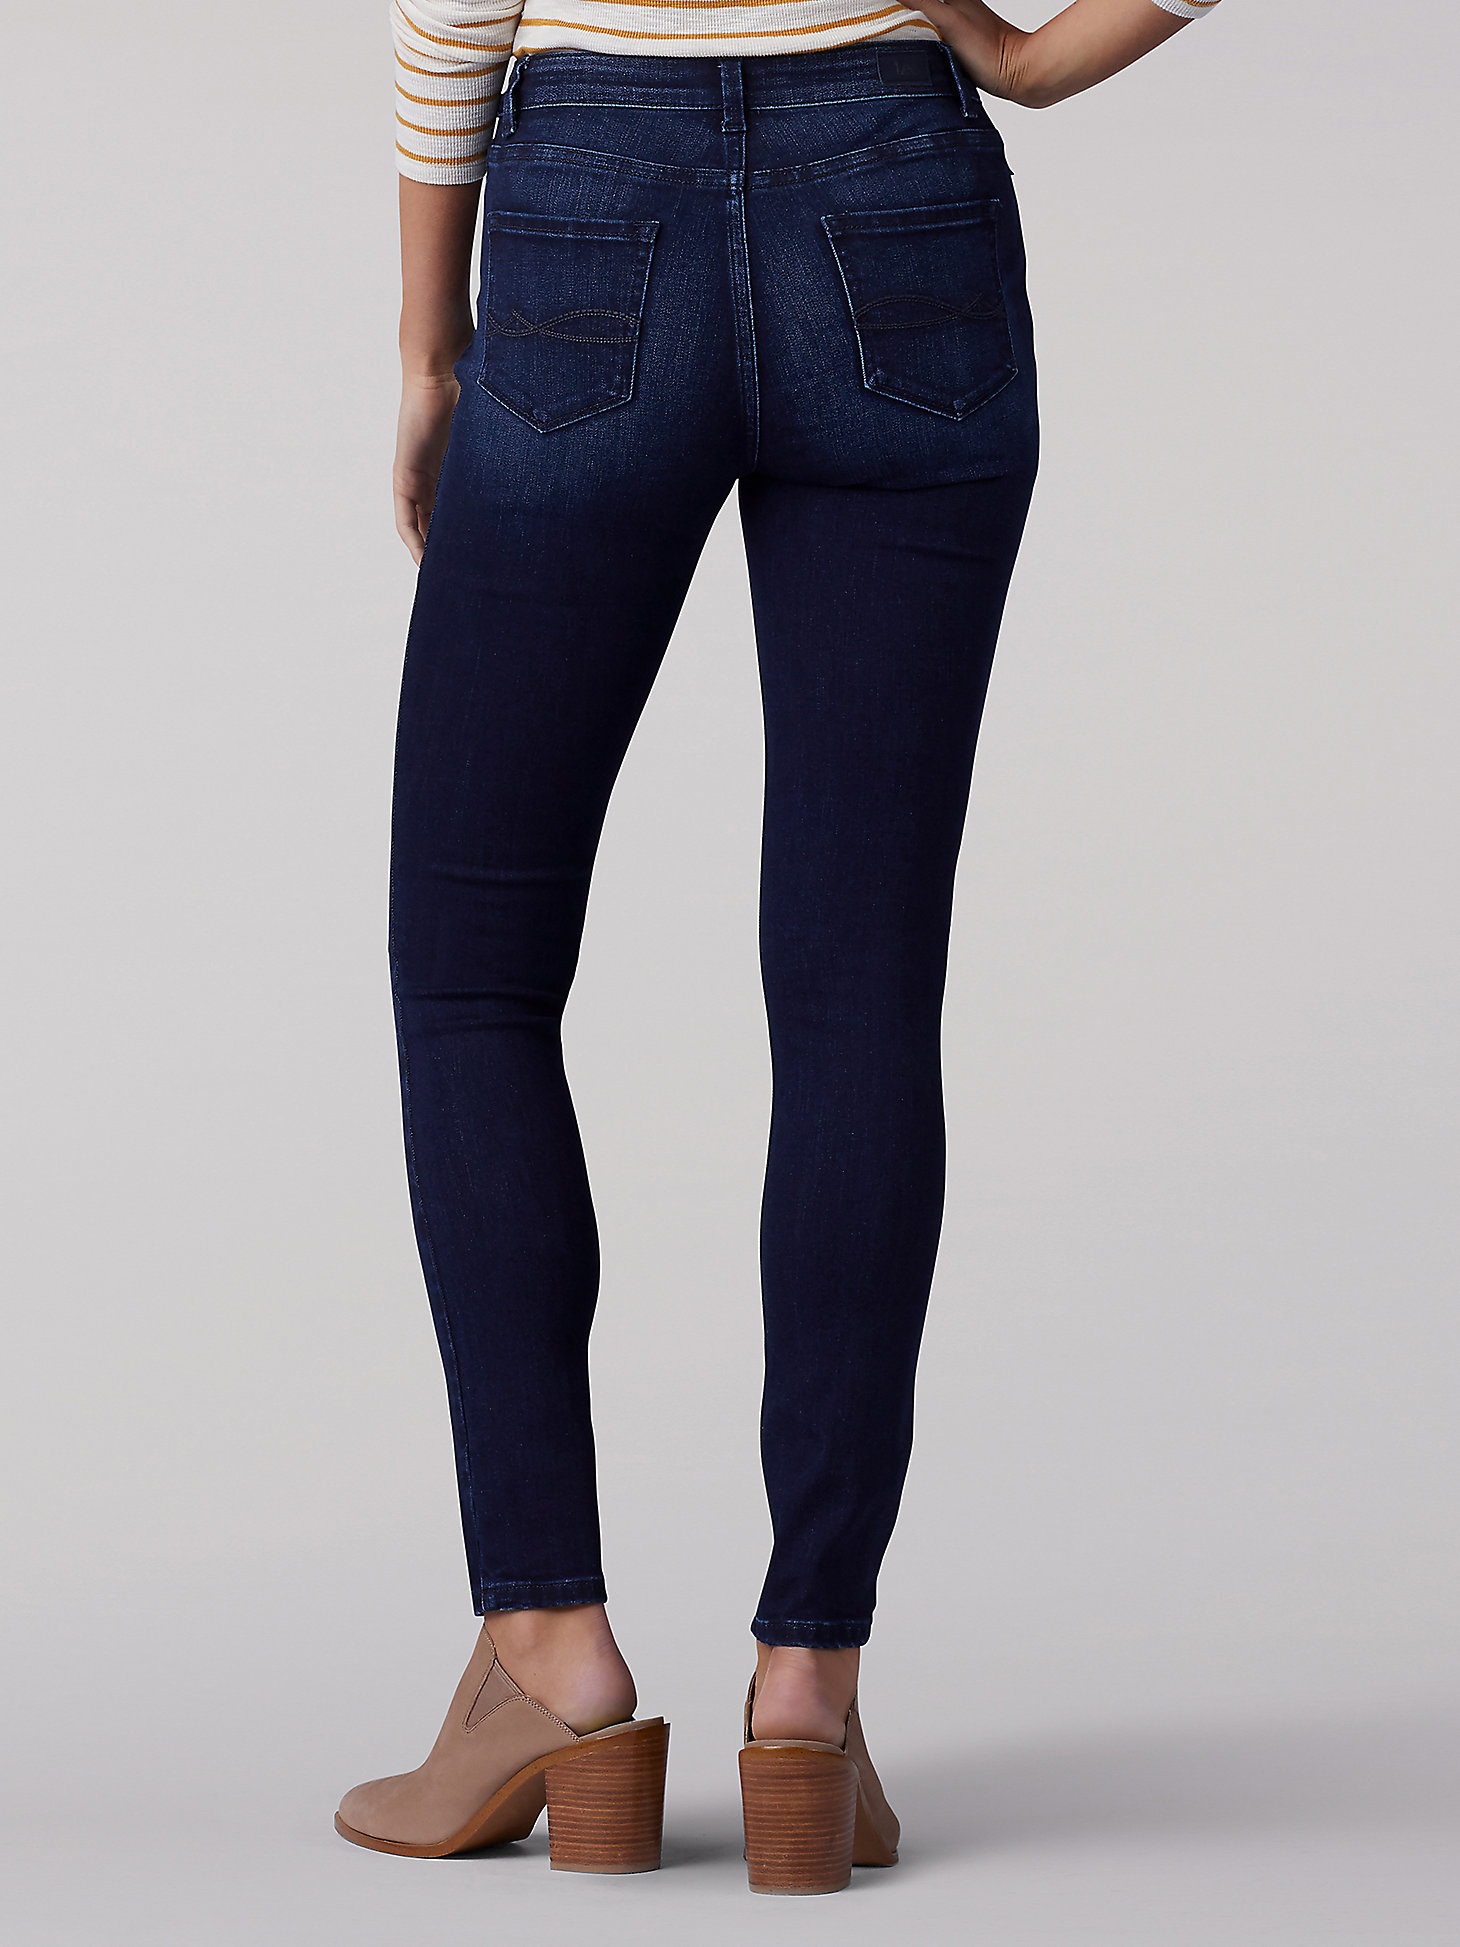 Lee Womens Tall Slimming Fit Rebound Slim Straight Jean Jeans